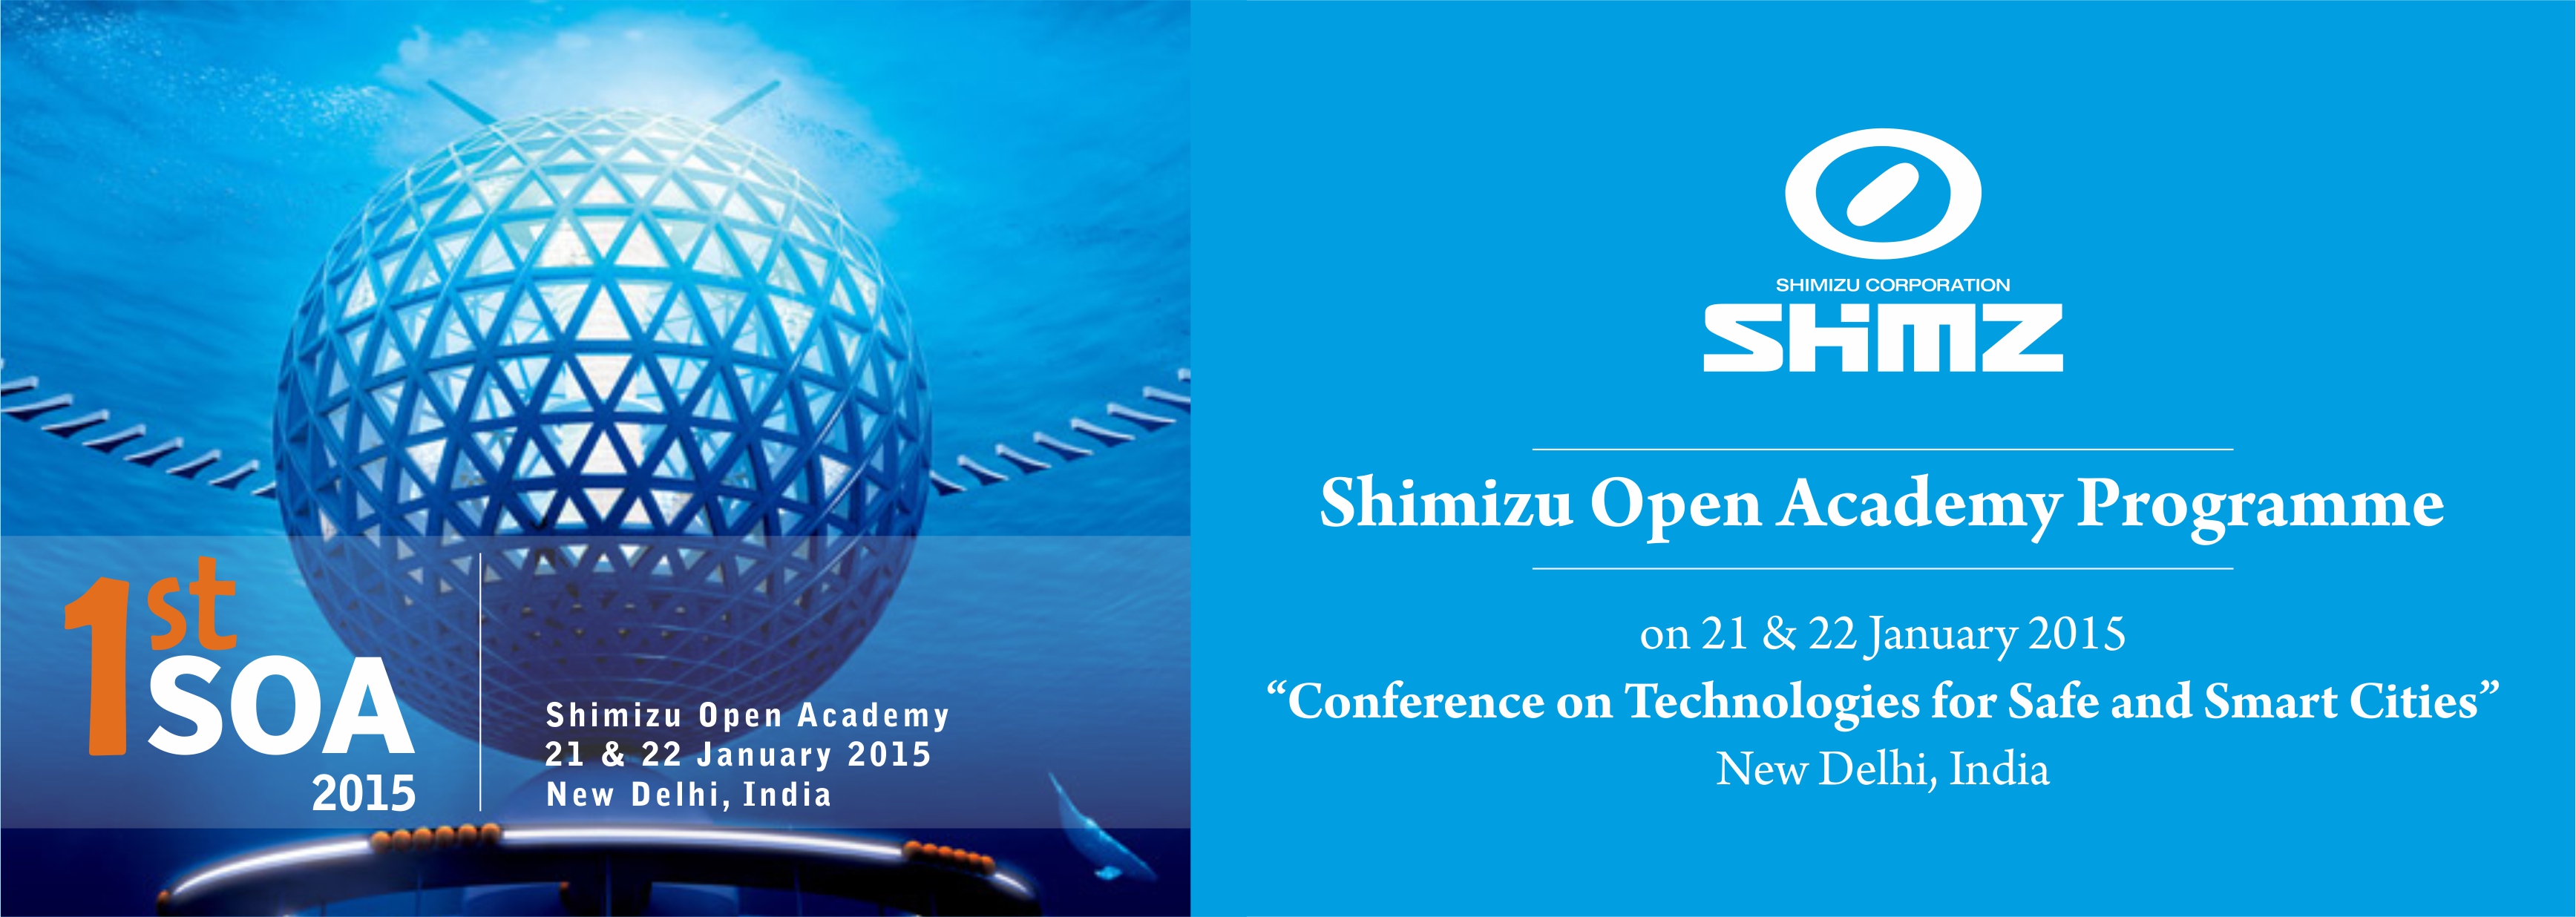 Shimizu Open Academy Programme